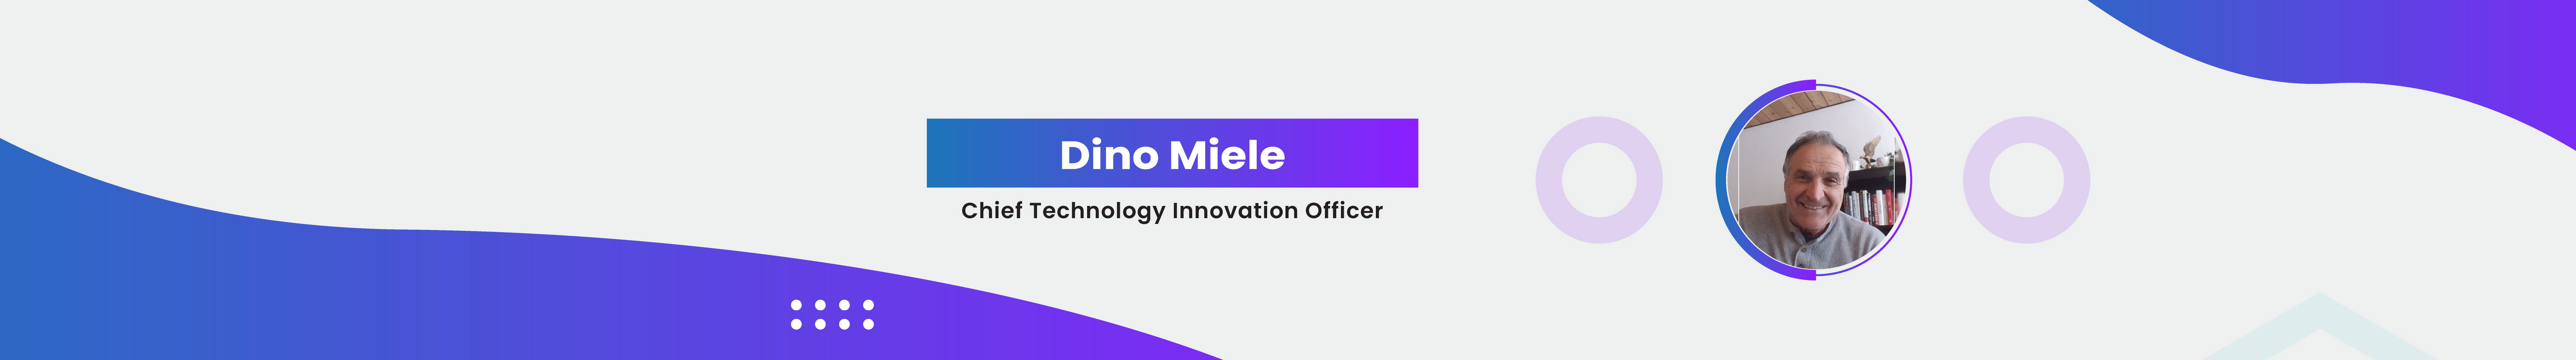 Dino Miele's profile banner